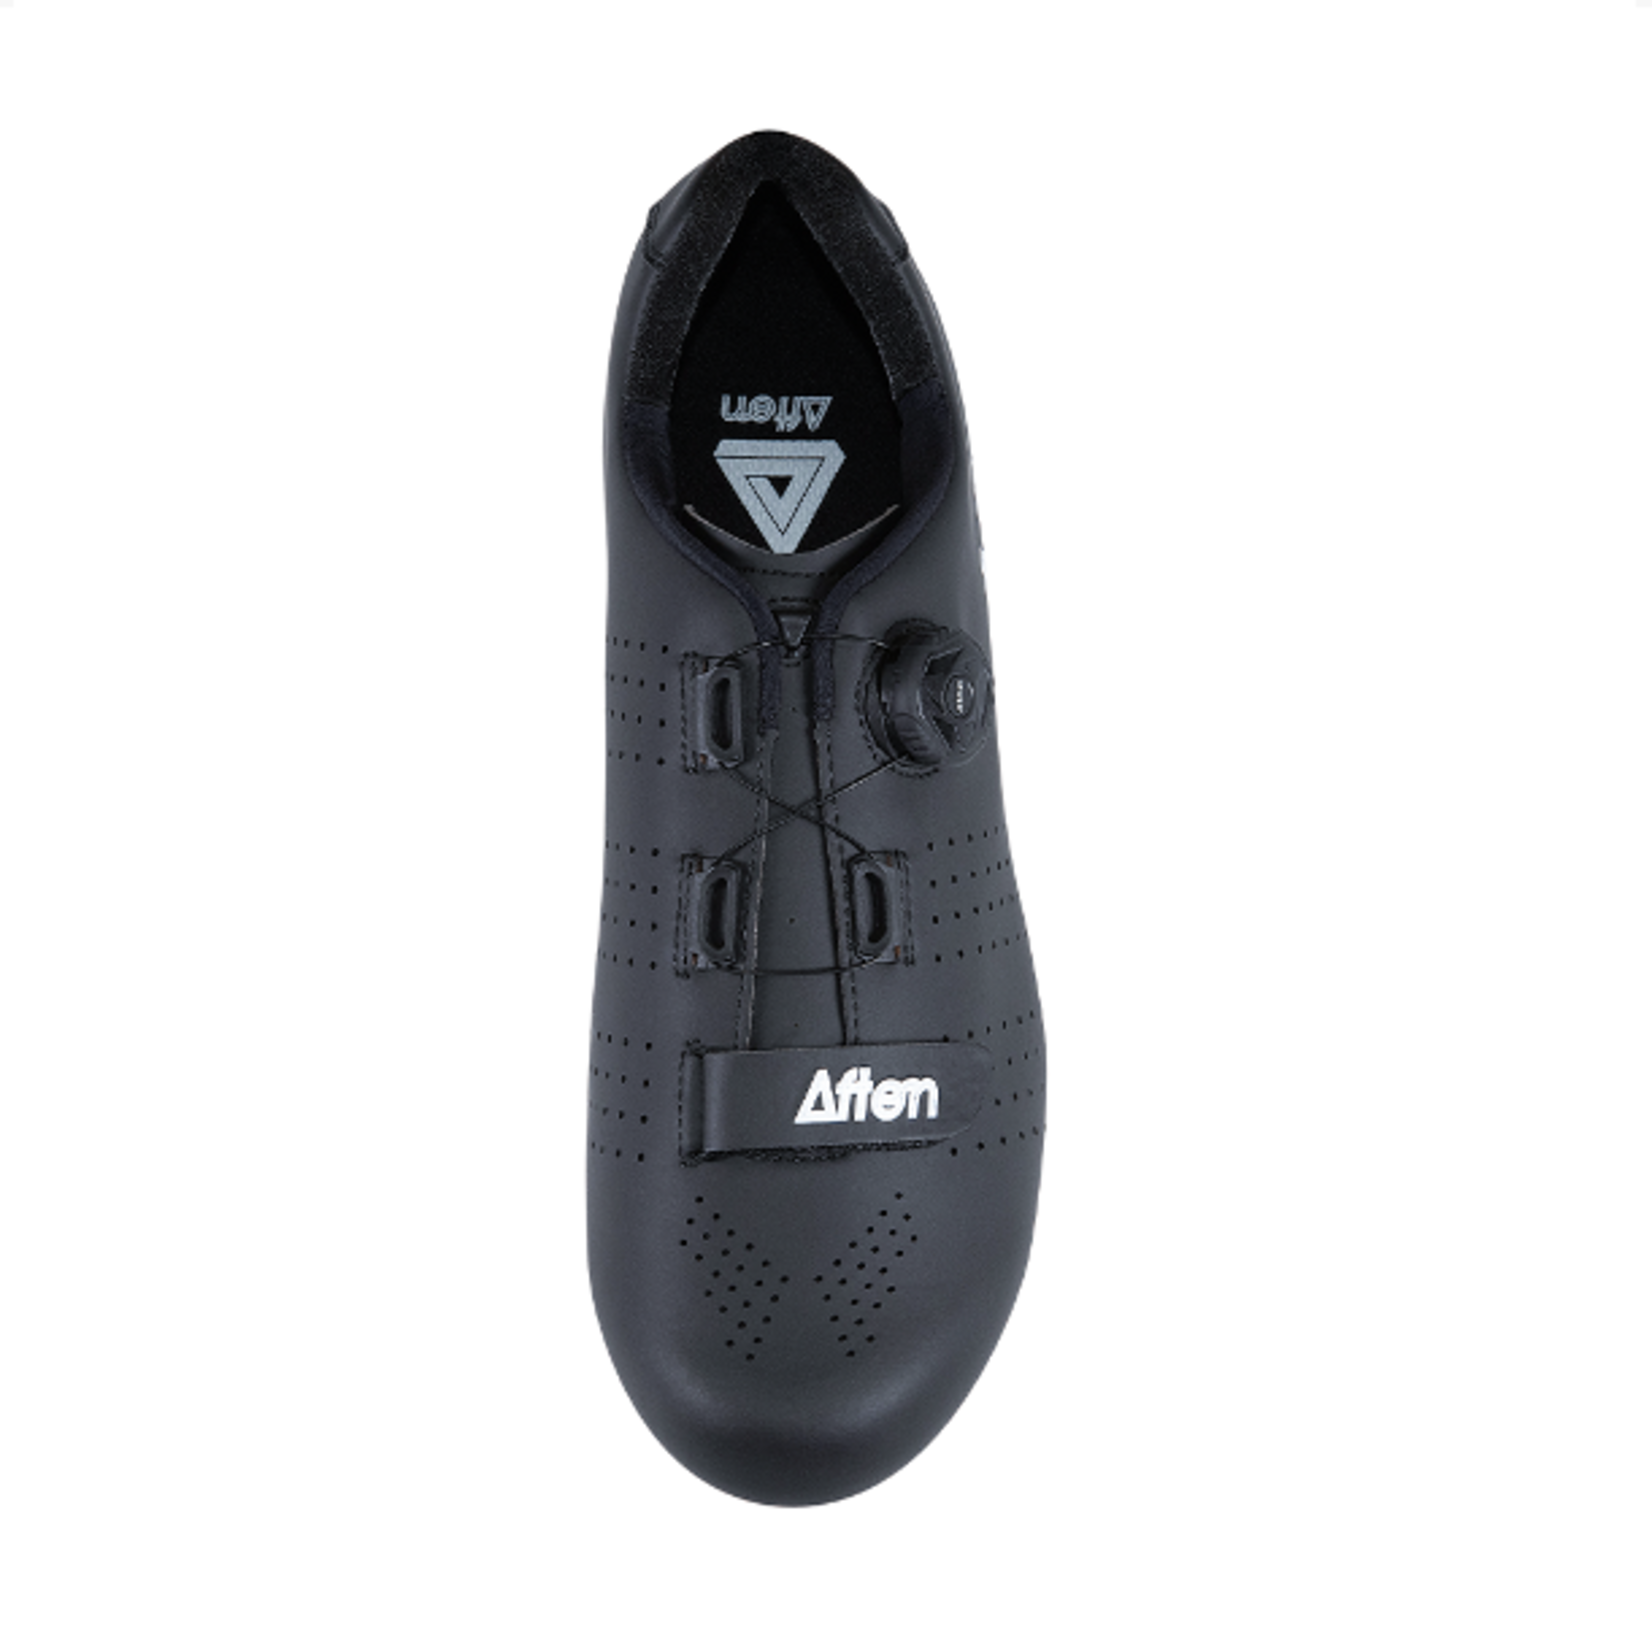 AFTON Gravel Shoes - ROYCE - Black/White, Size 48